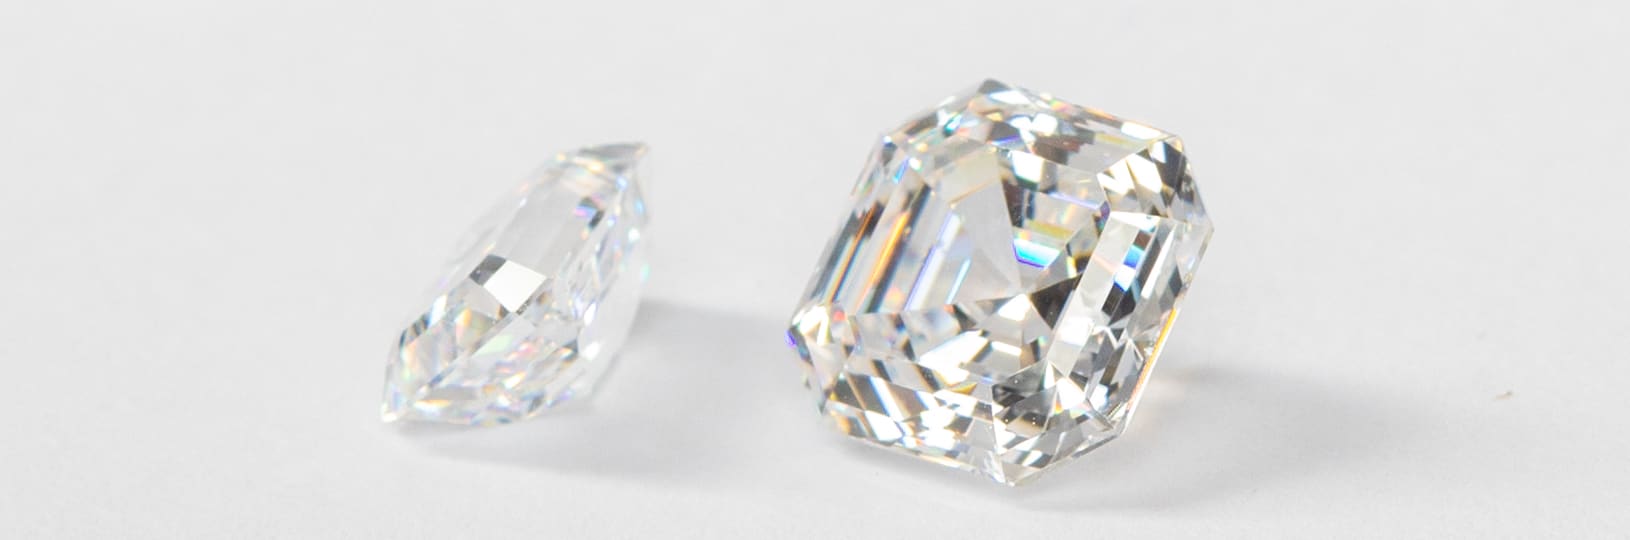 A loose Asscher cut diamond simulant